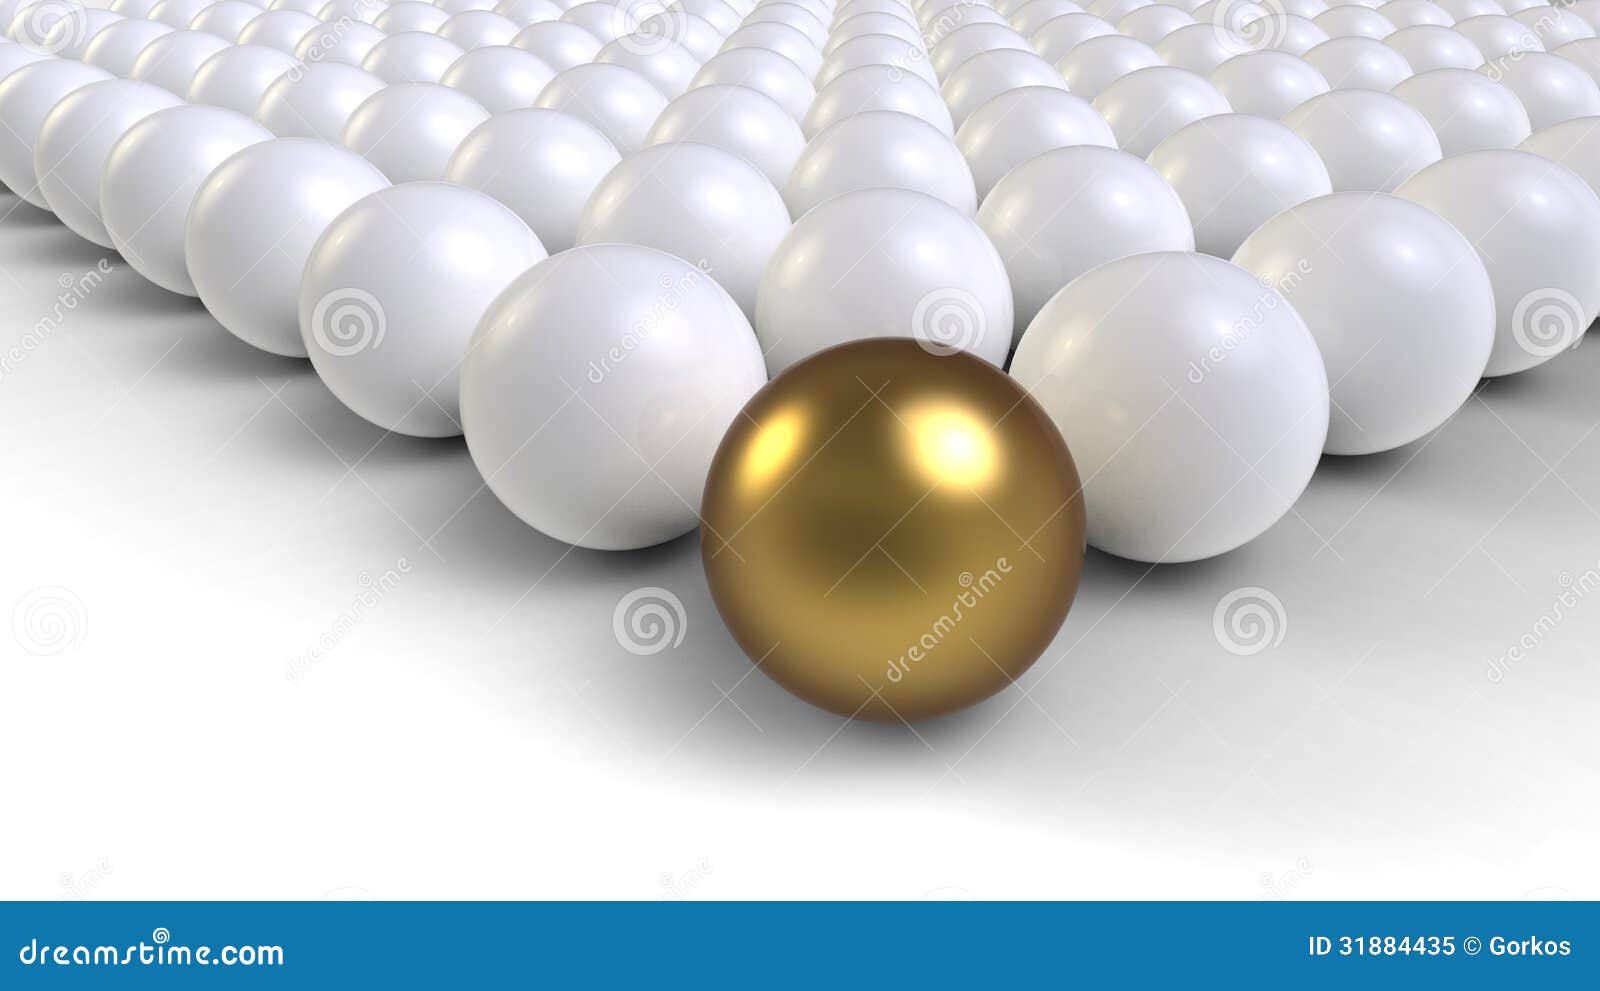 Gold ball stock illustration. Illustration of crowd, shape - 31884435